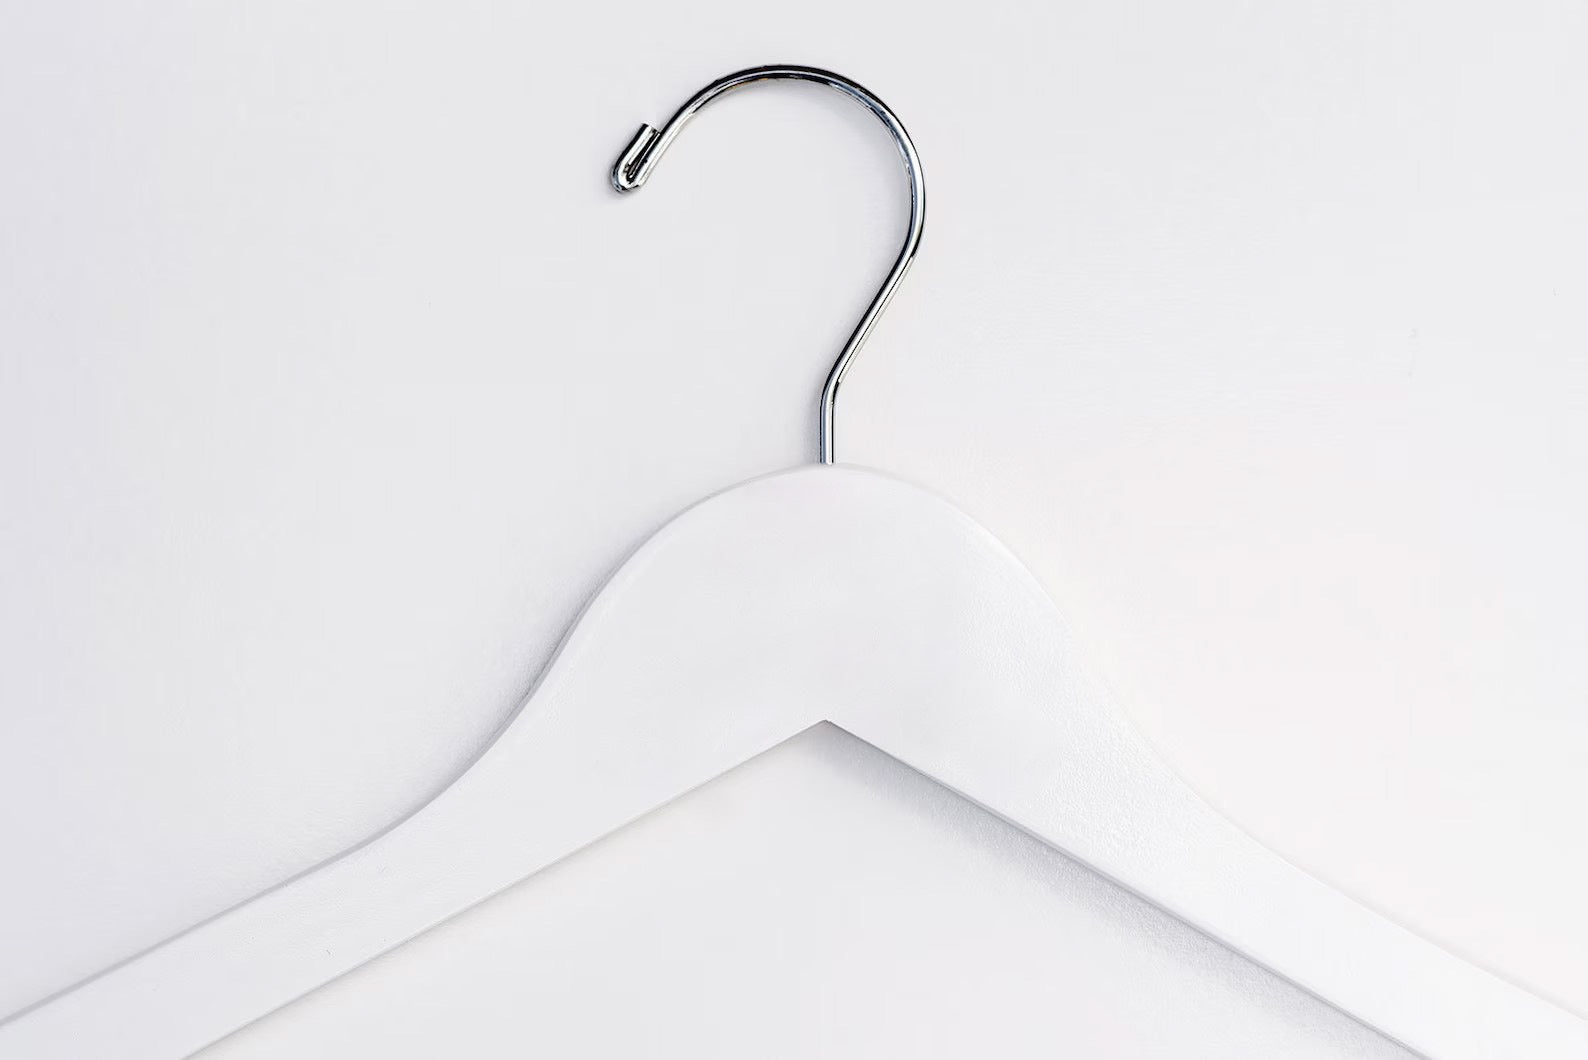 Custom Wedding Hangers - White Wooden Hangers –